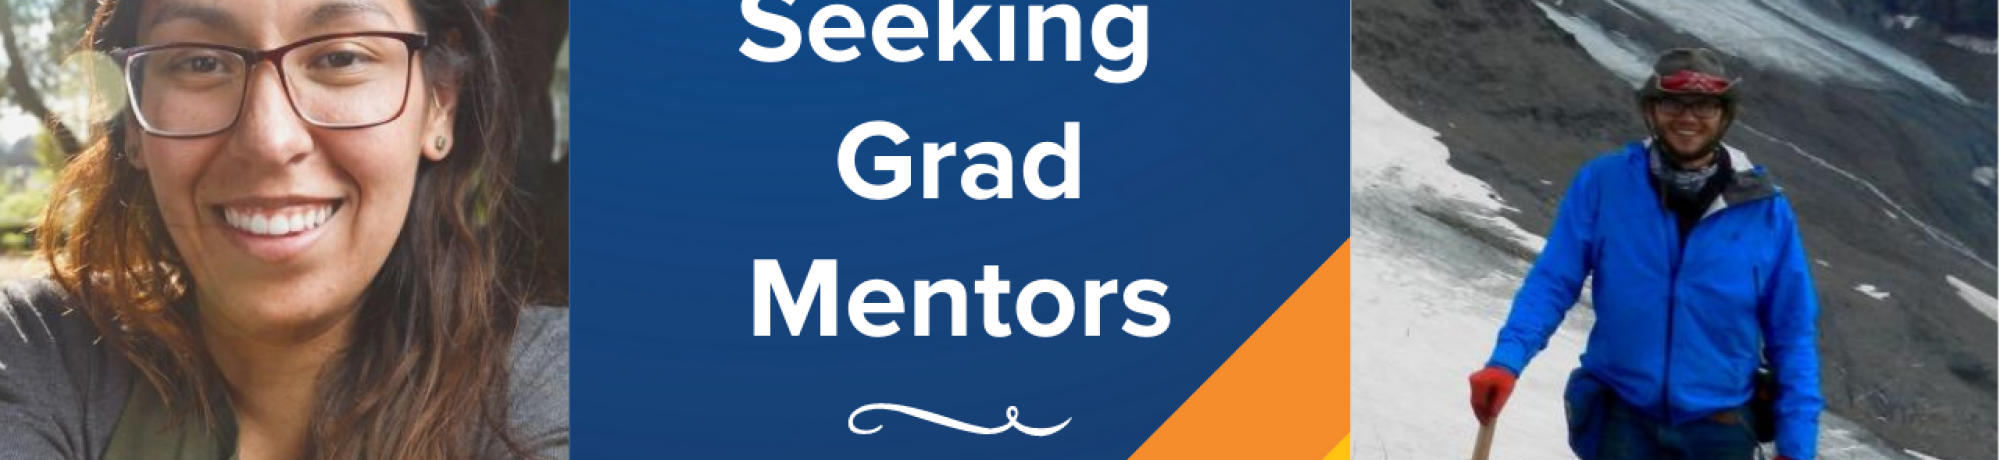 Seeking Grad Mentors for First Gen Students